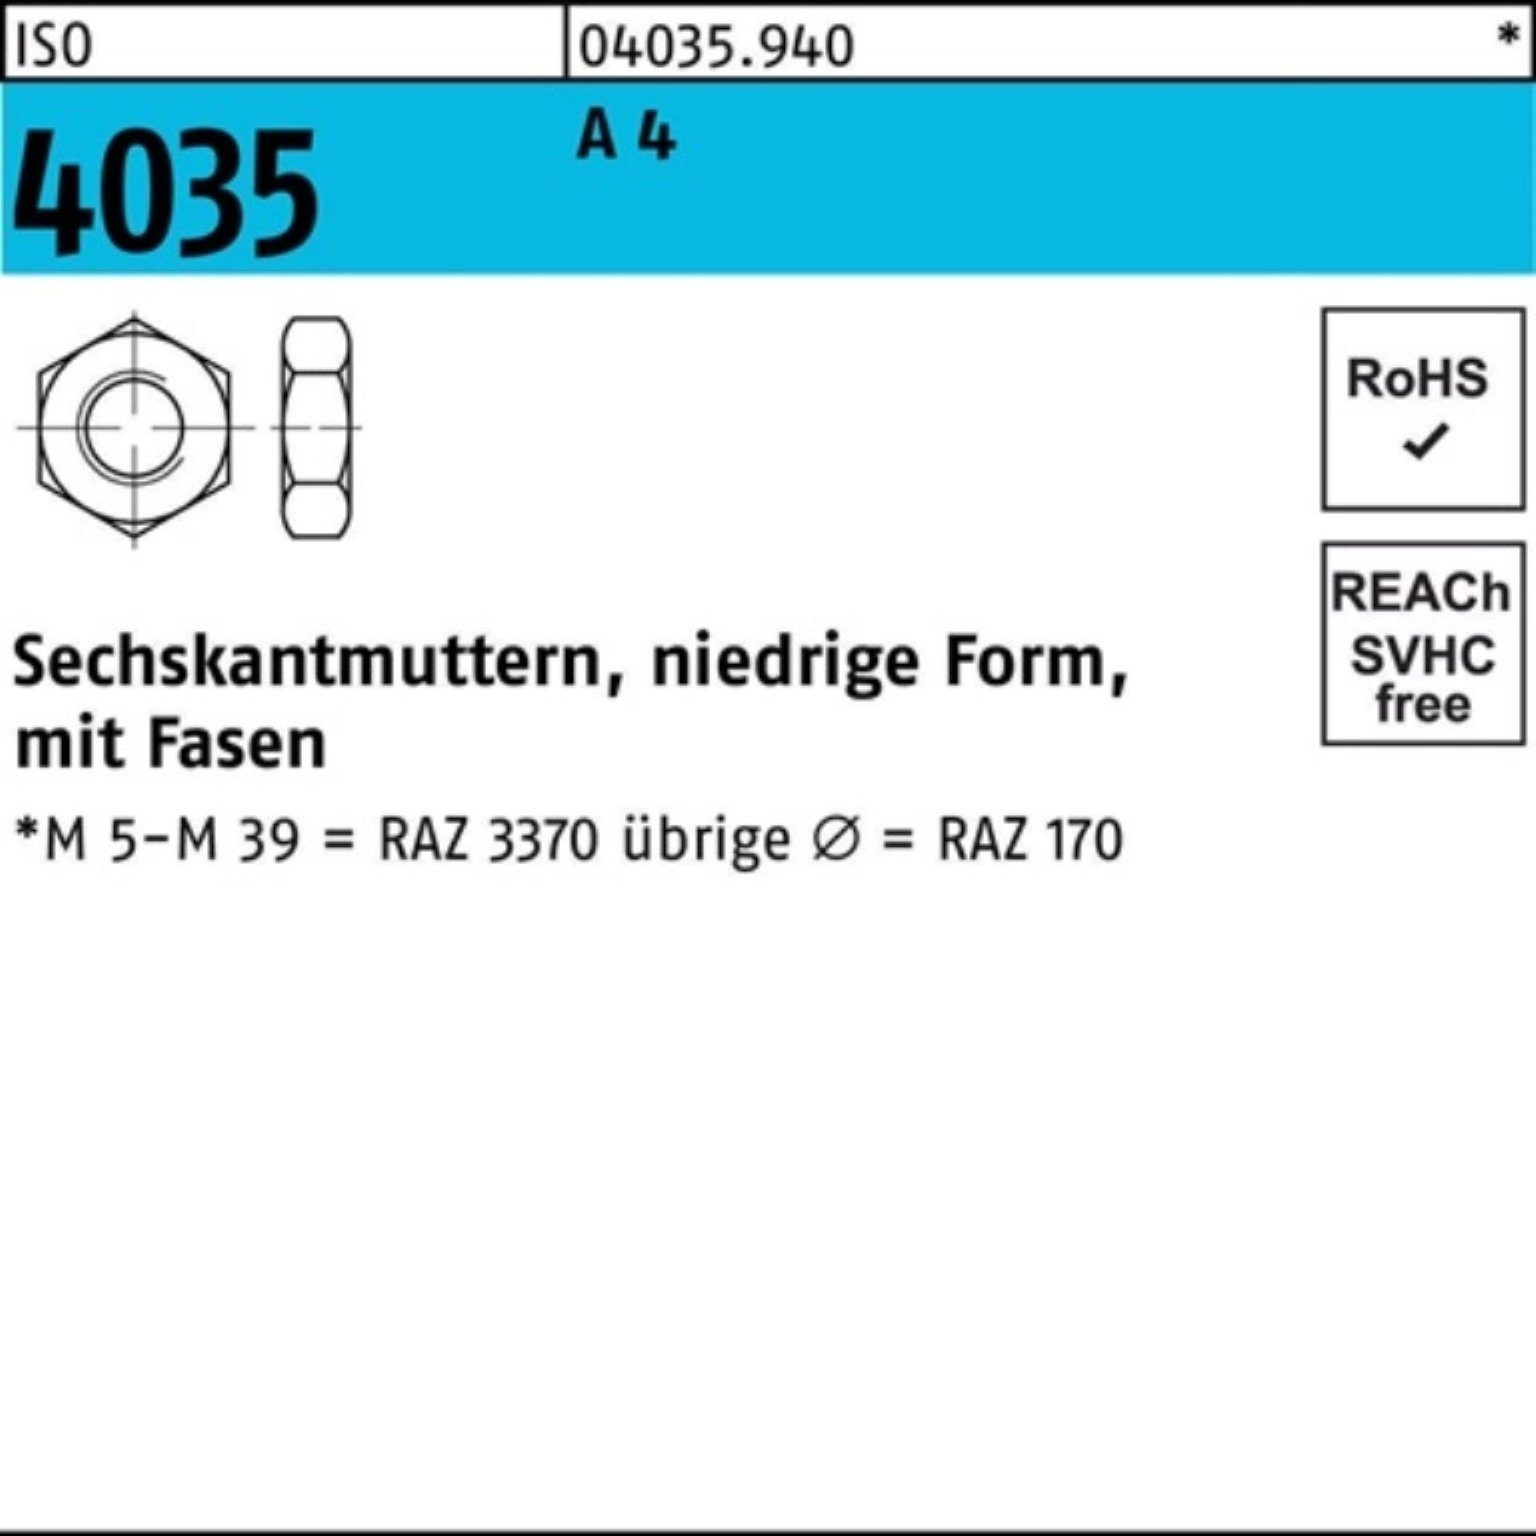 Stück ISO Muttern niedrig 4035 Fasen Pack 4 Sechskantmutter IS 25 M16 100er A Reyher